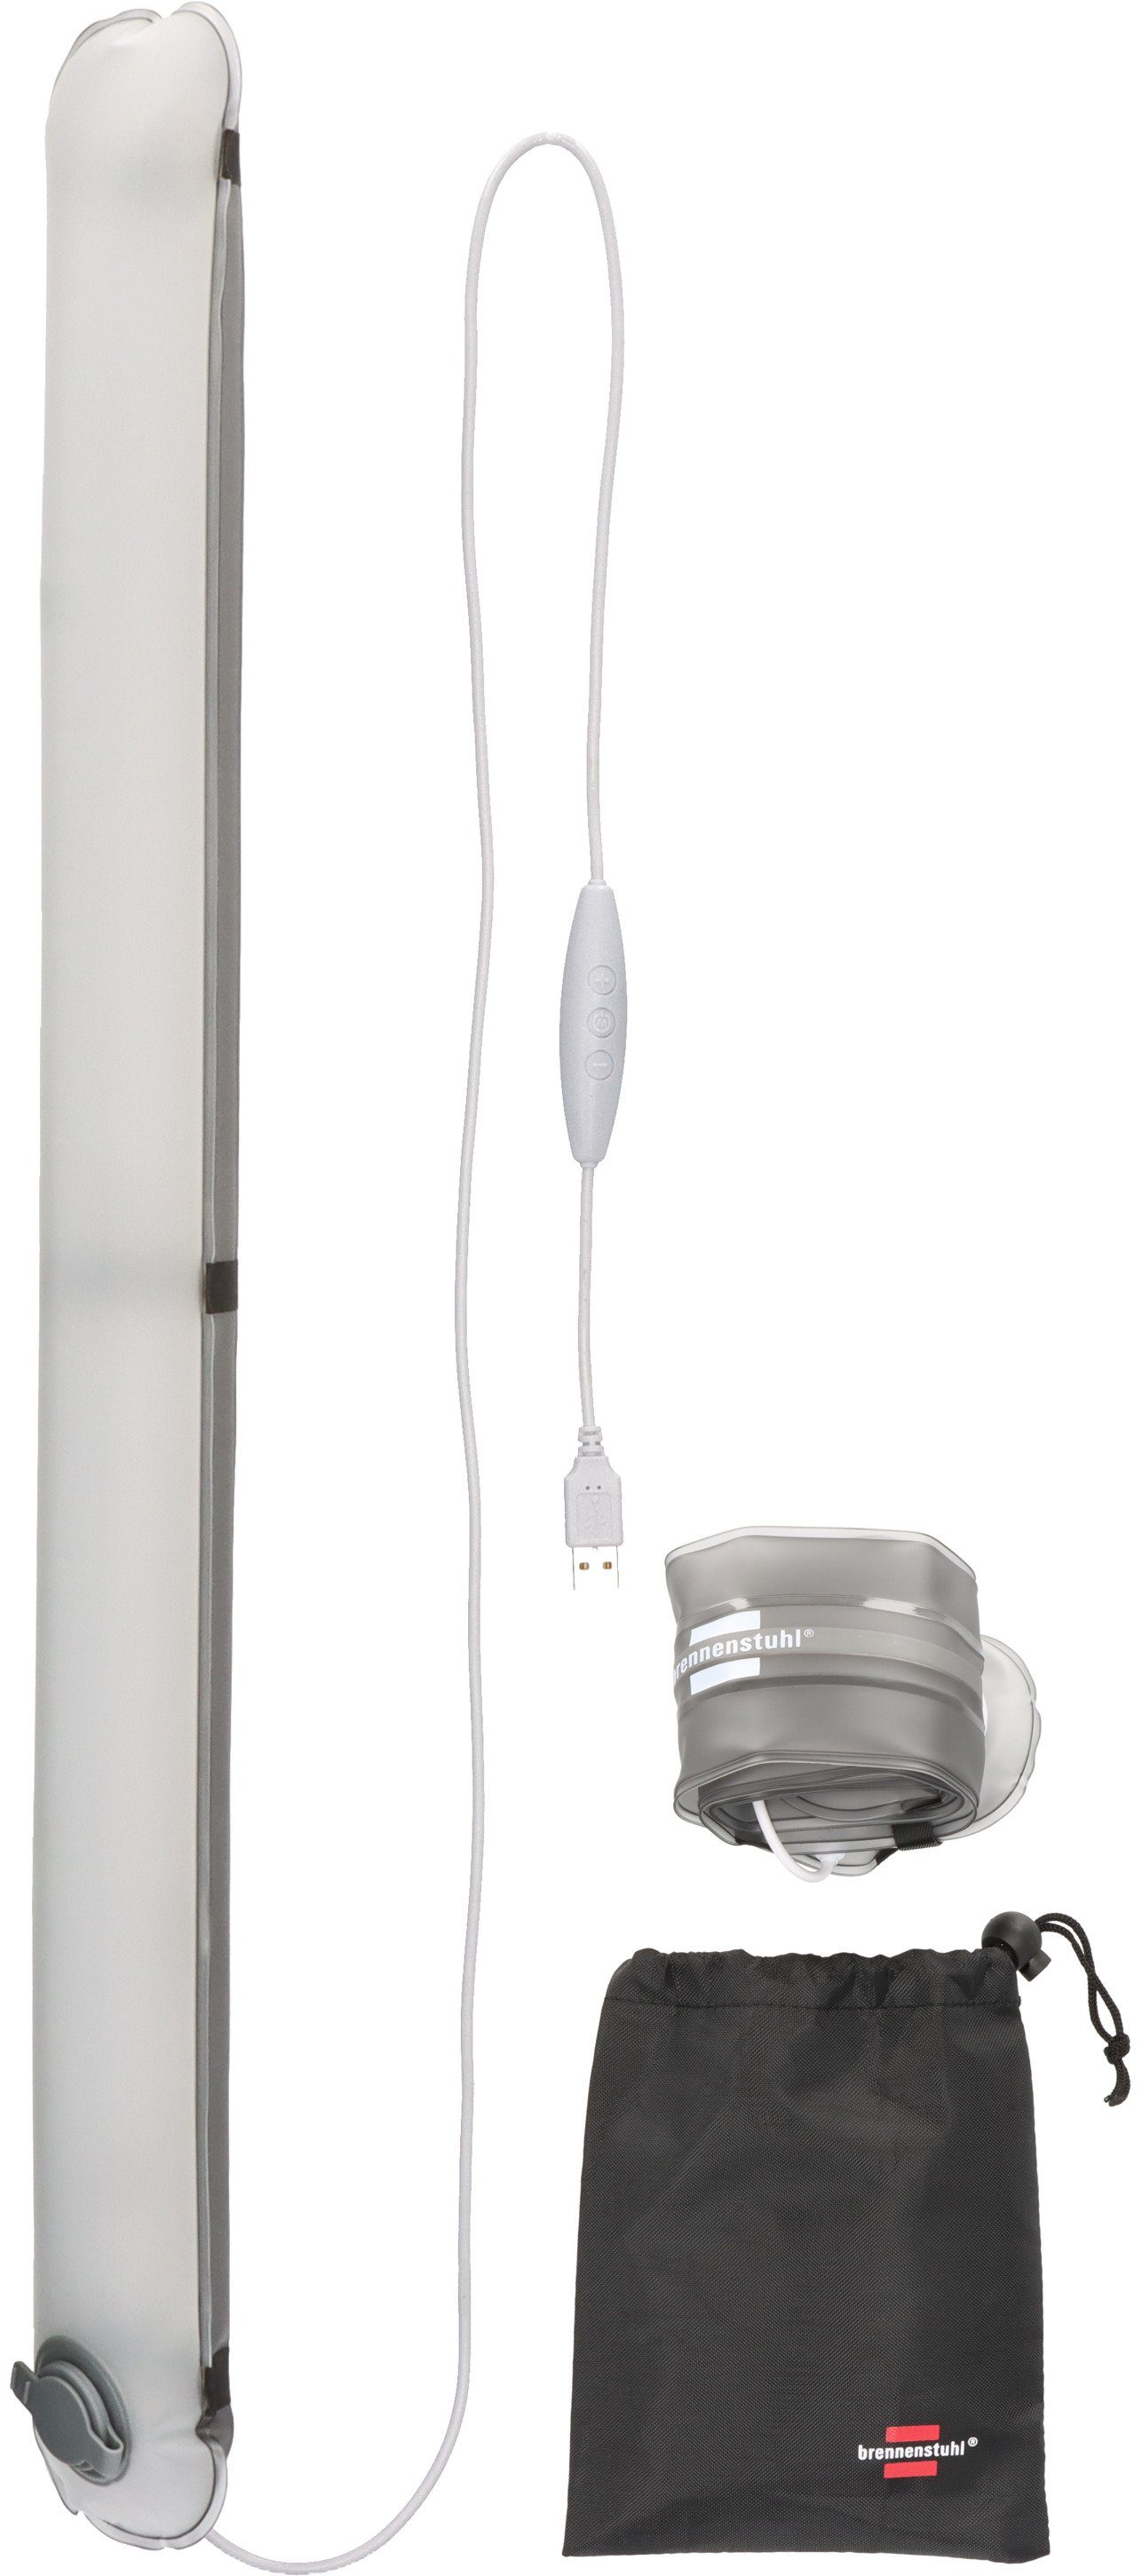 aufblasbar, faltbare Air 1, integriert, stufenlos LED USB Brennenstuhl dimmbar, LED 1m Kabel Gartenleuchte LED fest OLI Röhre mit